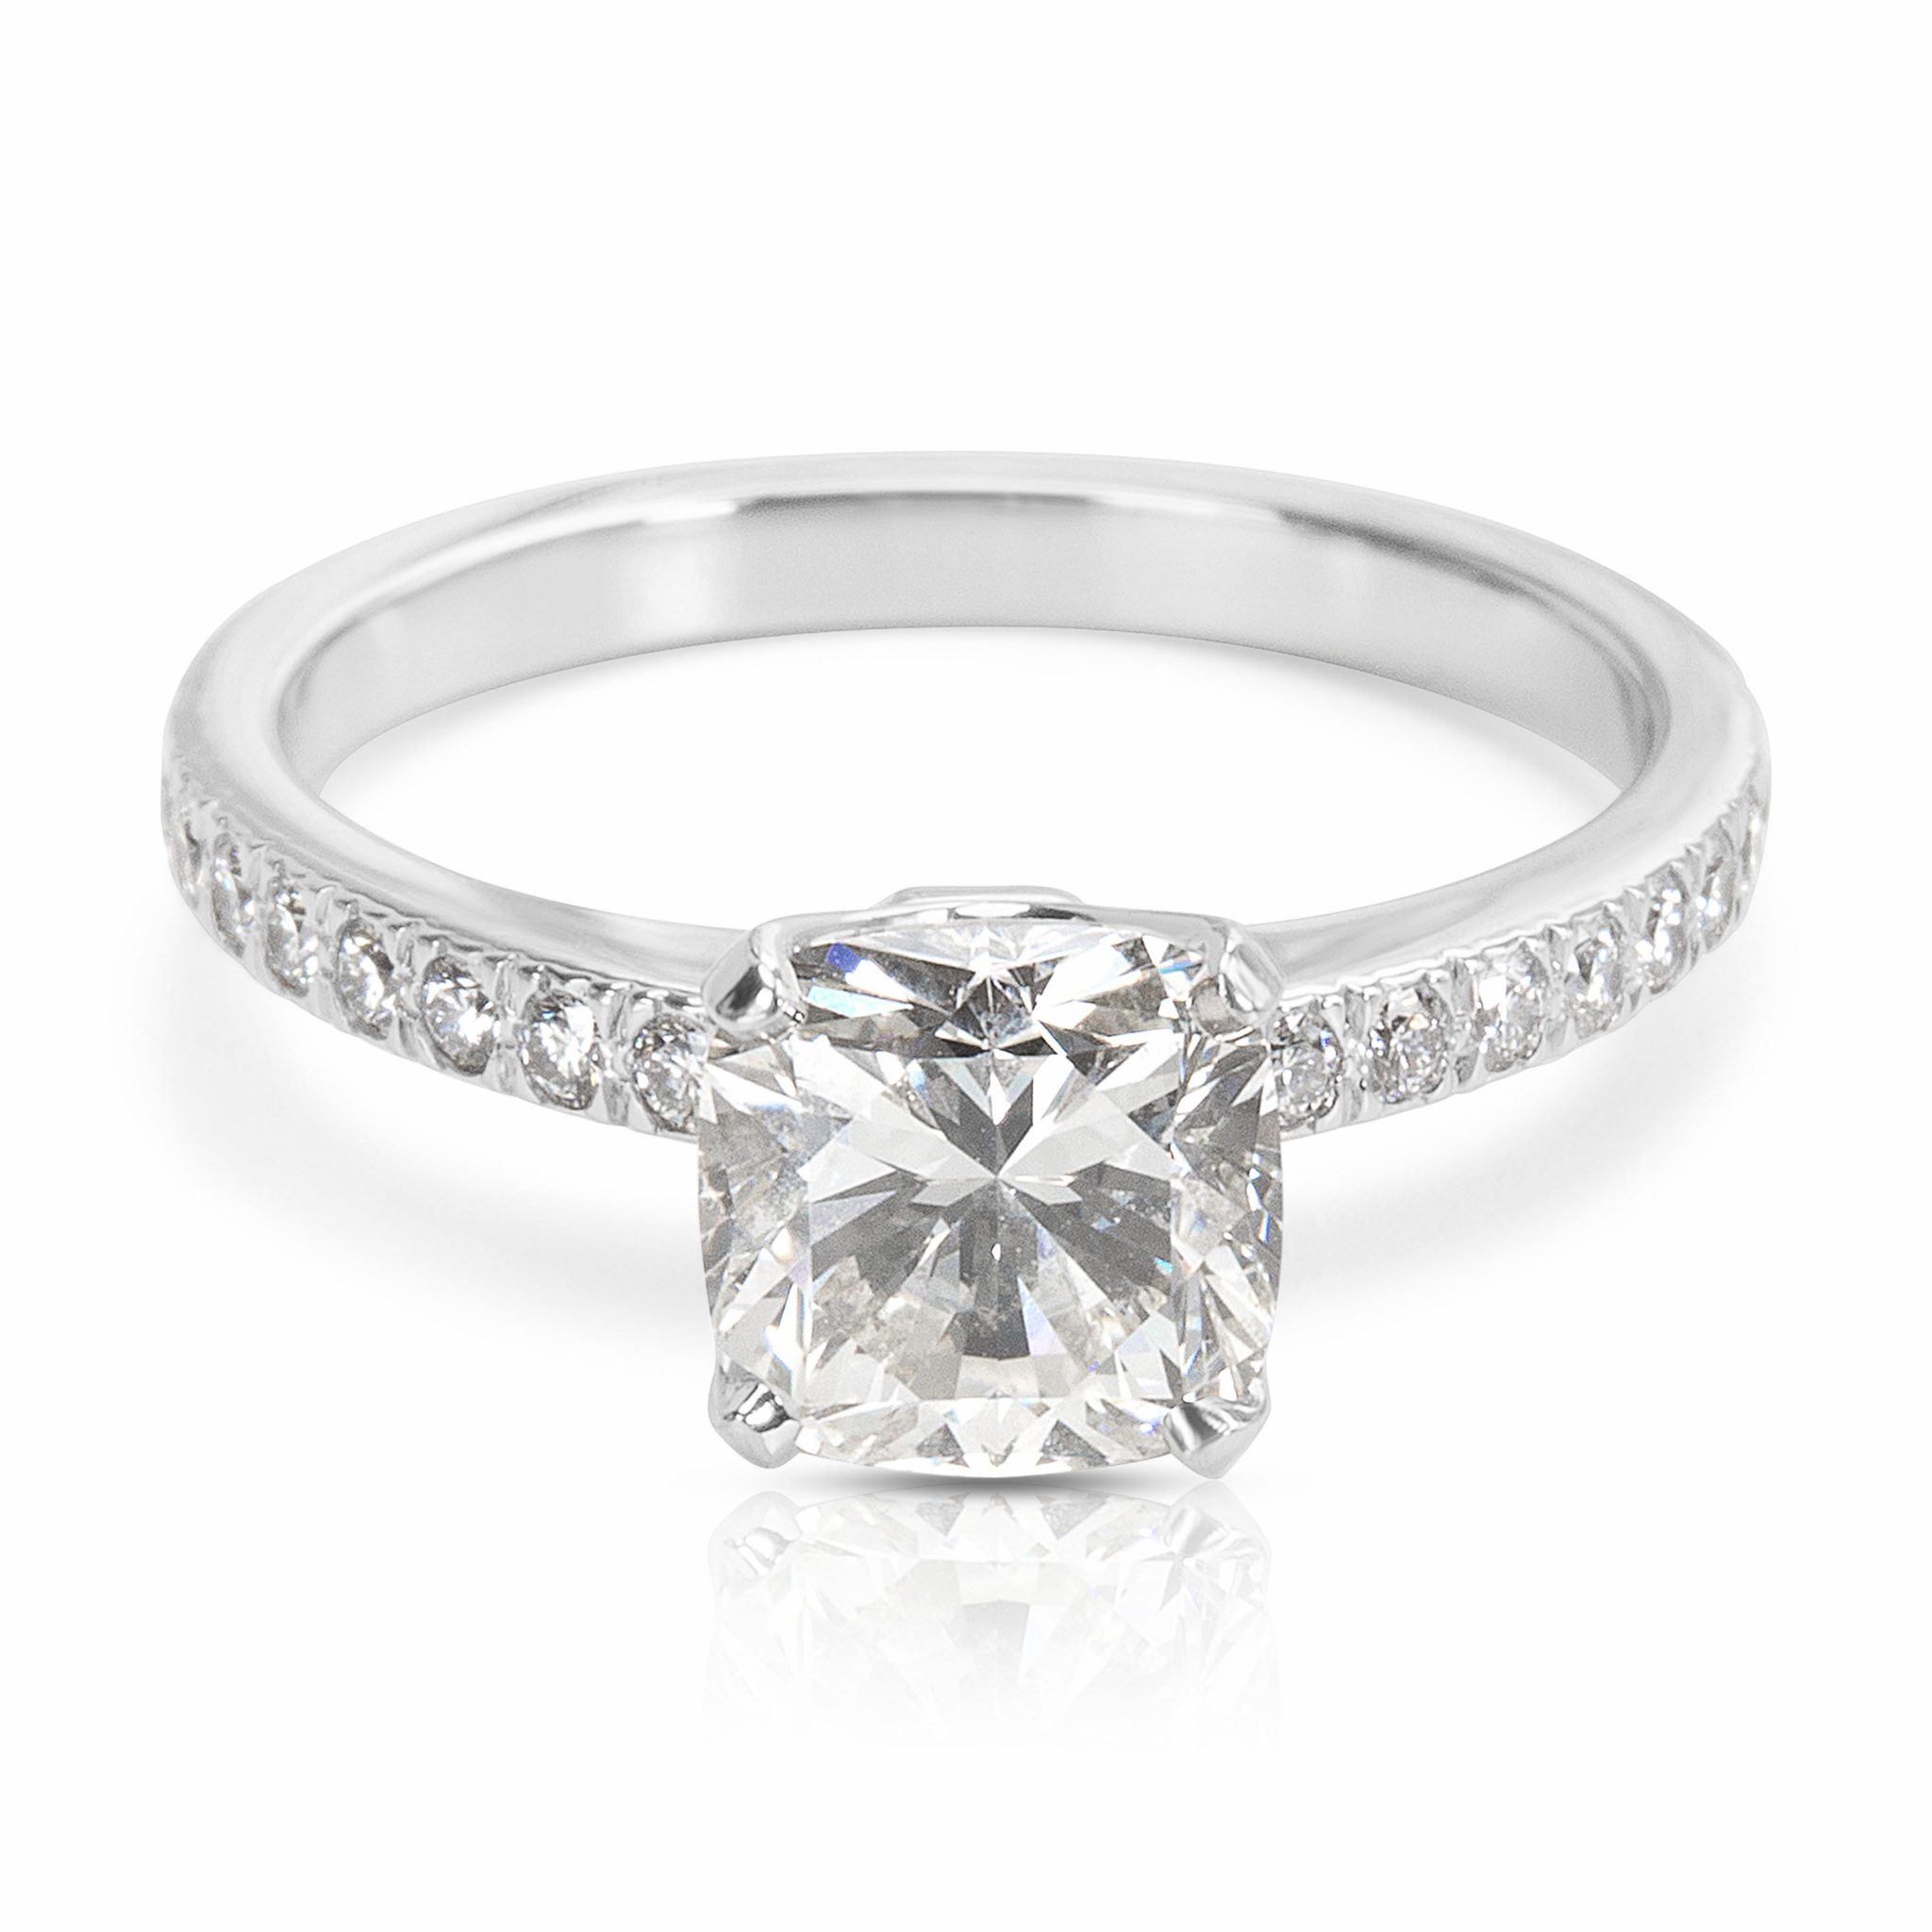 diamond ring with cushion cut center stone